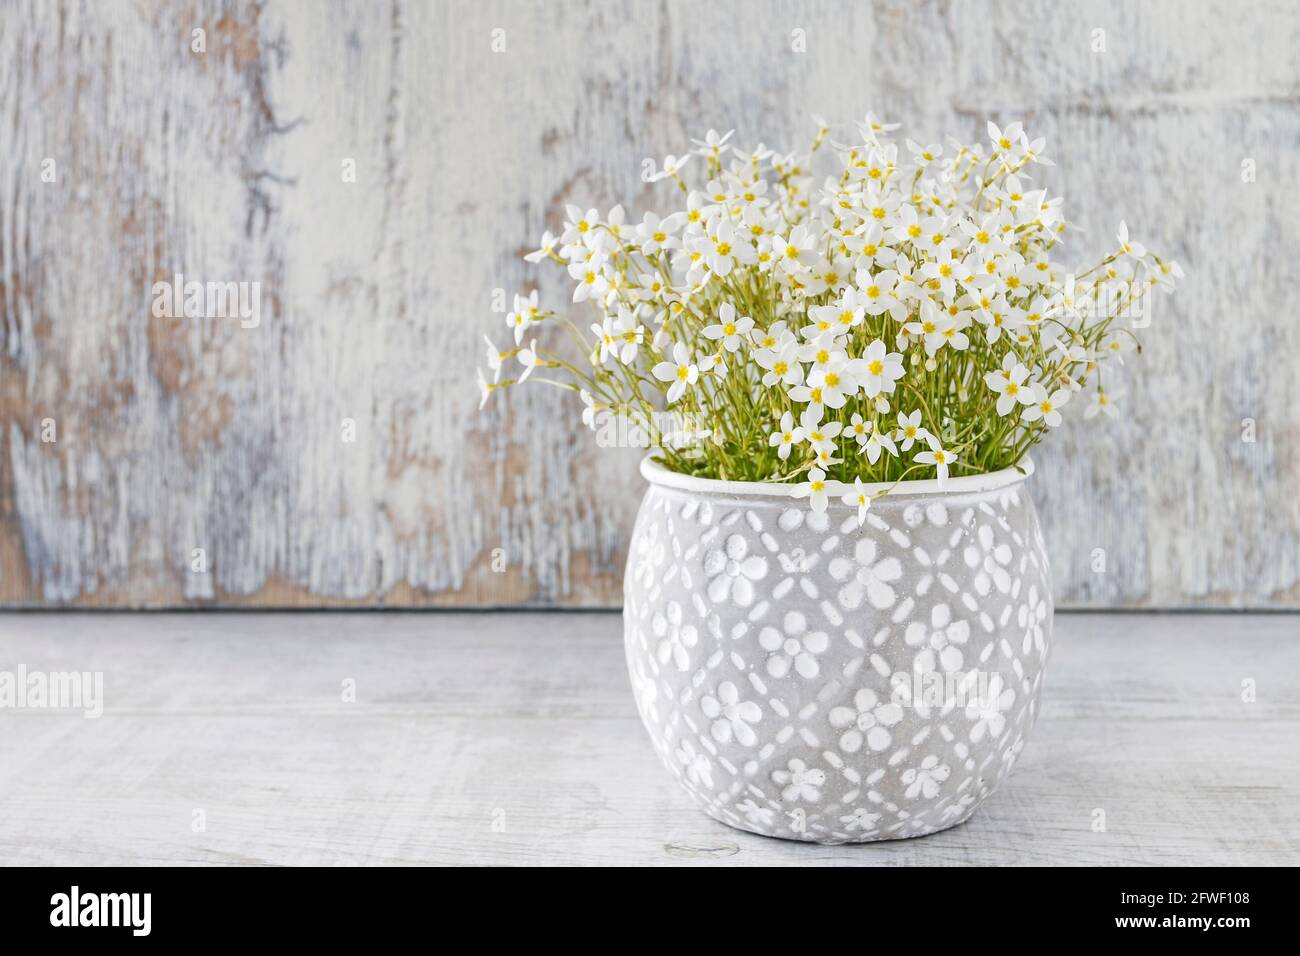 Saxifraga arendsii (Schneeteppich) flowers in ceramic pot. Party decor Stock Photo